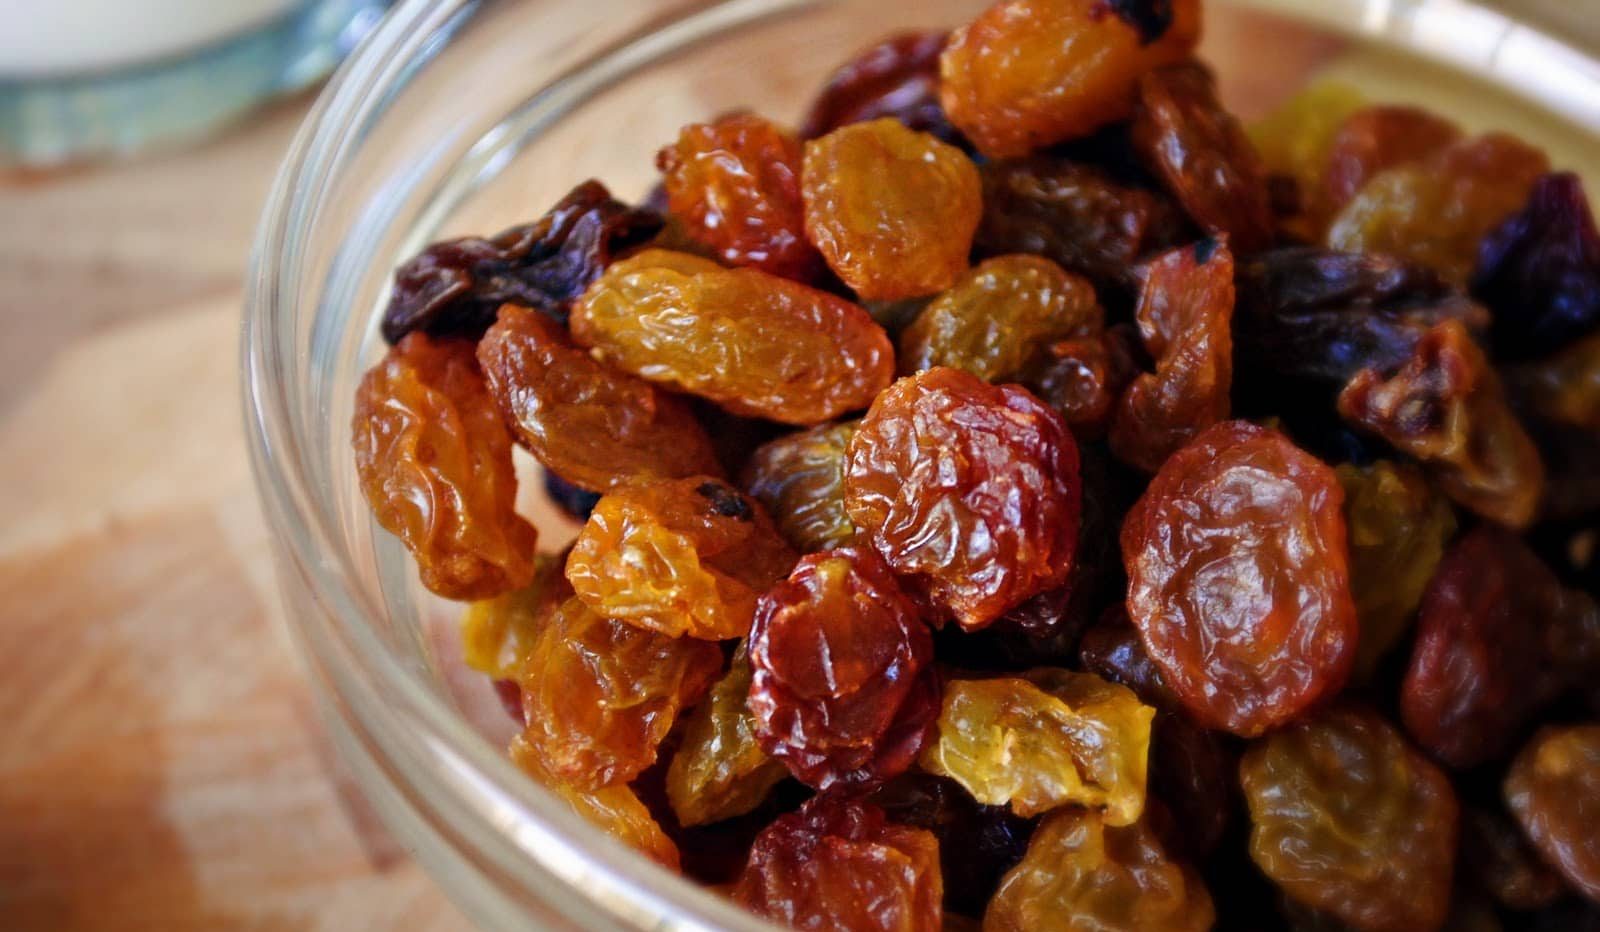  Buy New harvests of organic monukka raisins + Great Price 